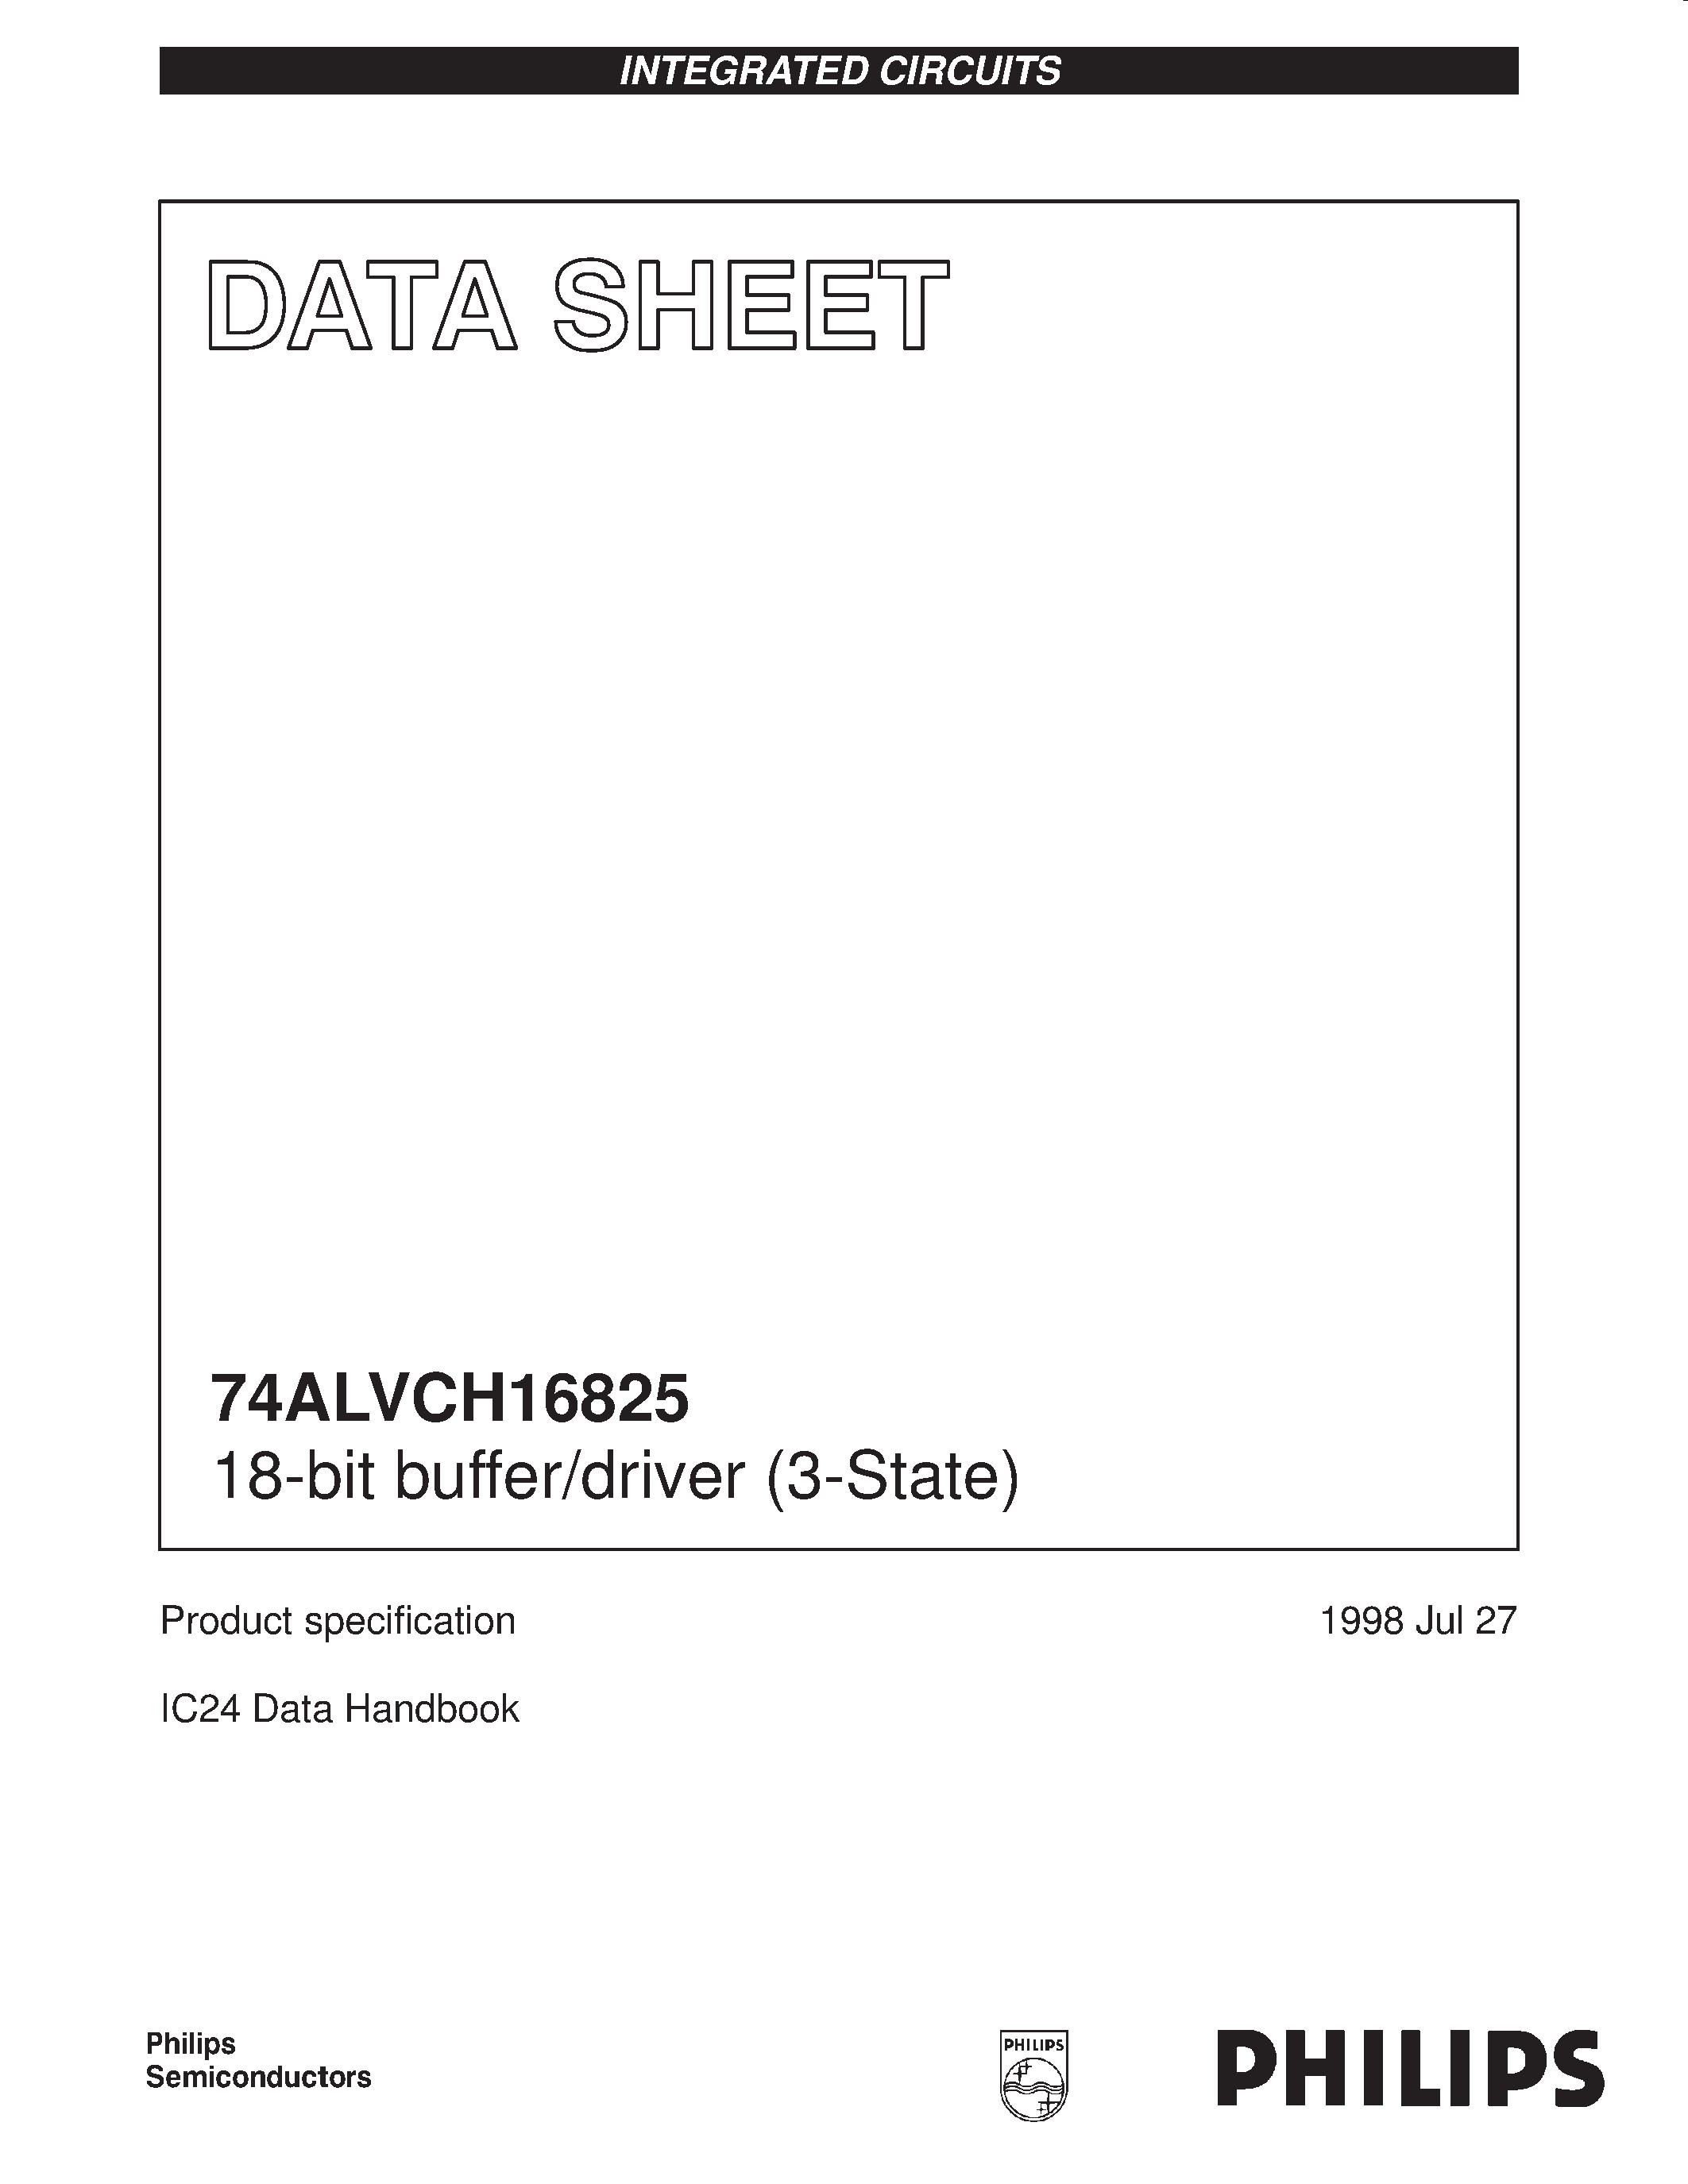 Даташит 74ALVCH16825DGG - 18-bit buffer/driver 3-State страница 1